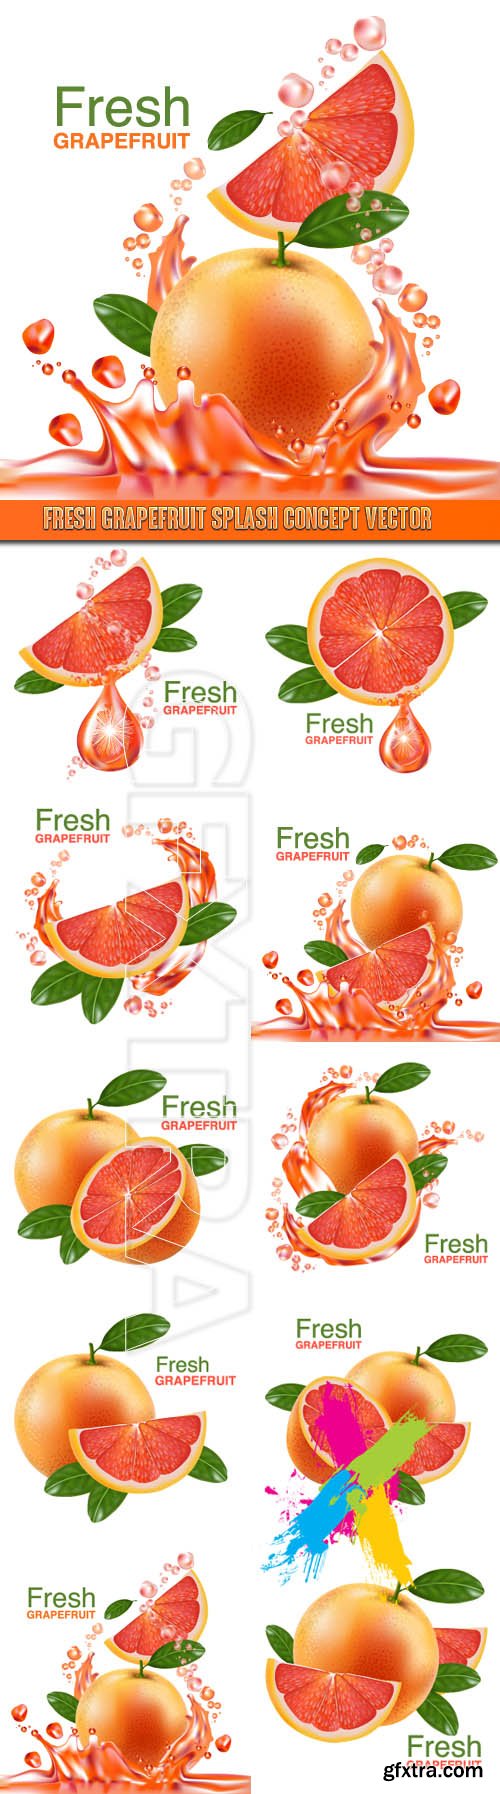 Fresh grapefruit splash concept vector